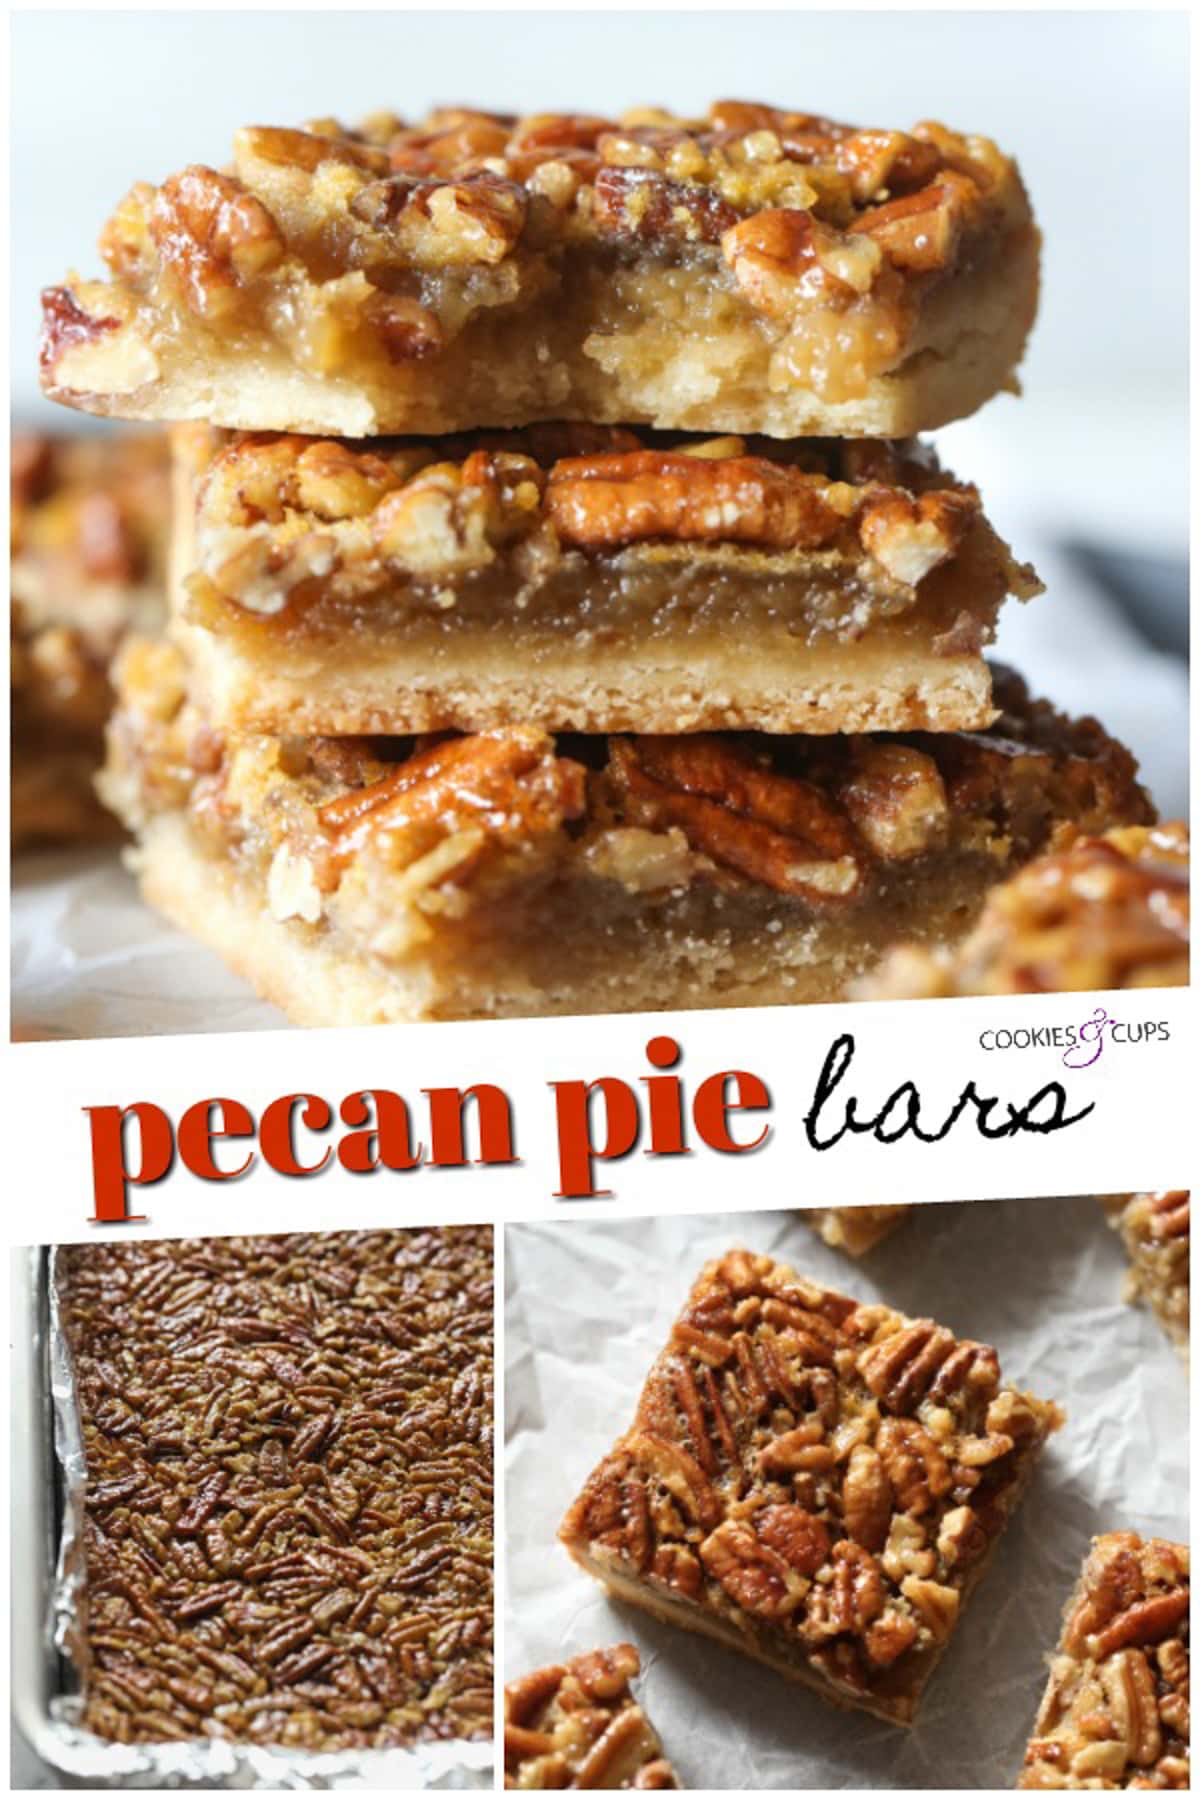 Pecan Pie Bars Image Collage for Pinterest